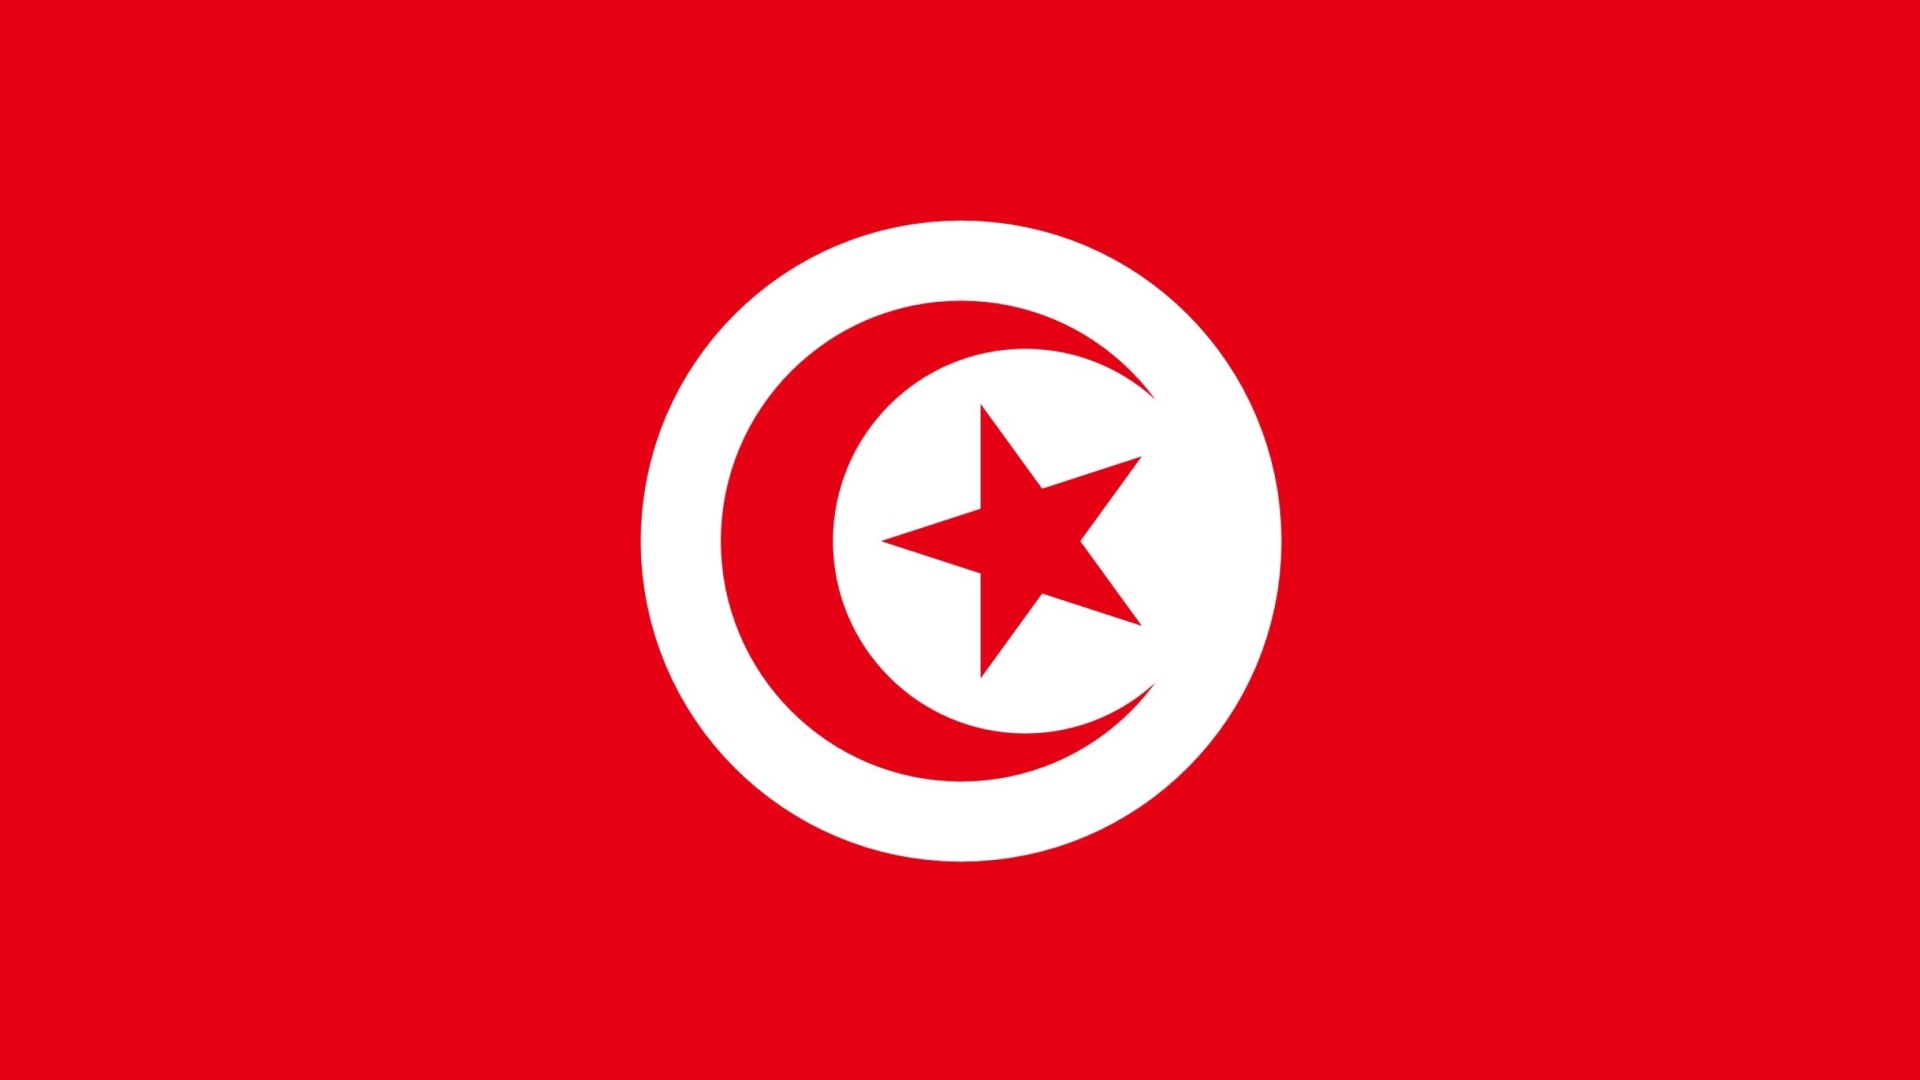 Flag of Tunisia wallpaper 1920x1080